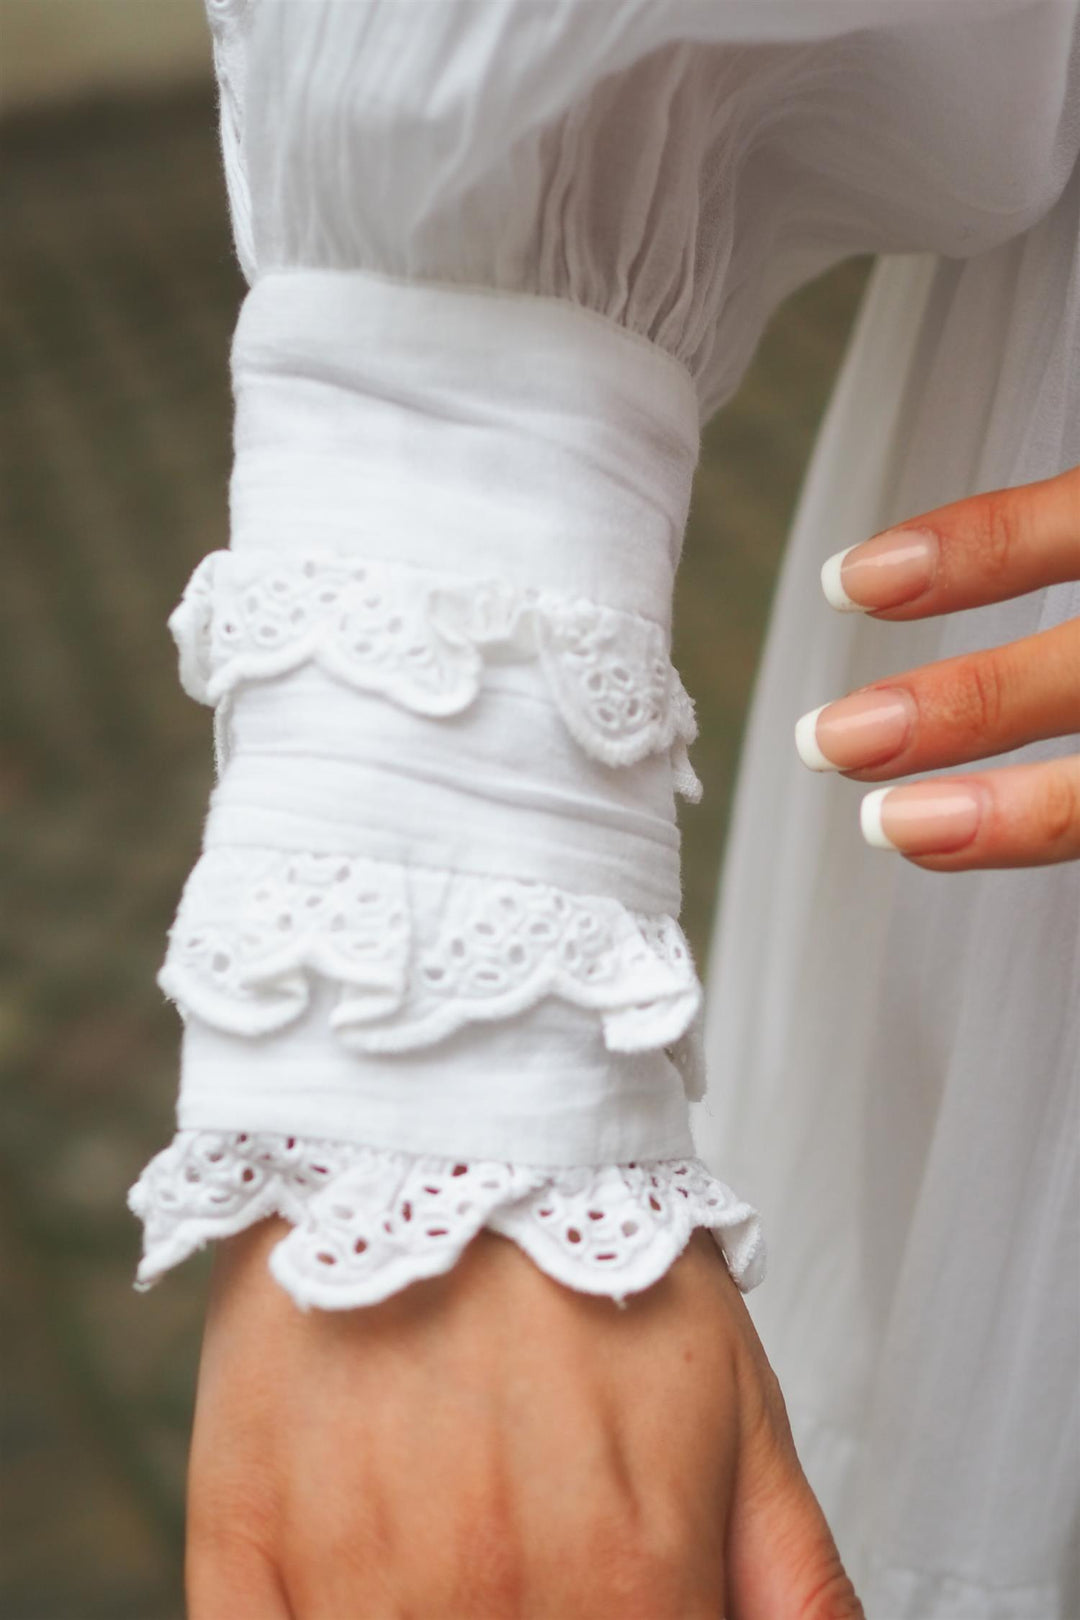 ByTimo - Cotton Slub Mini Dress